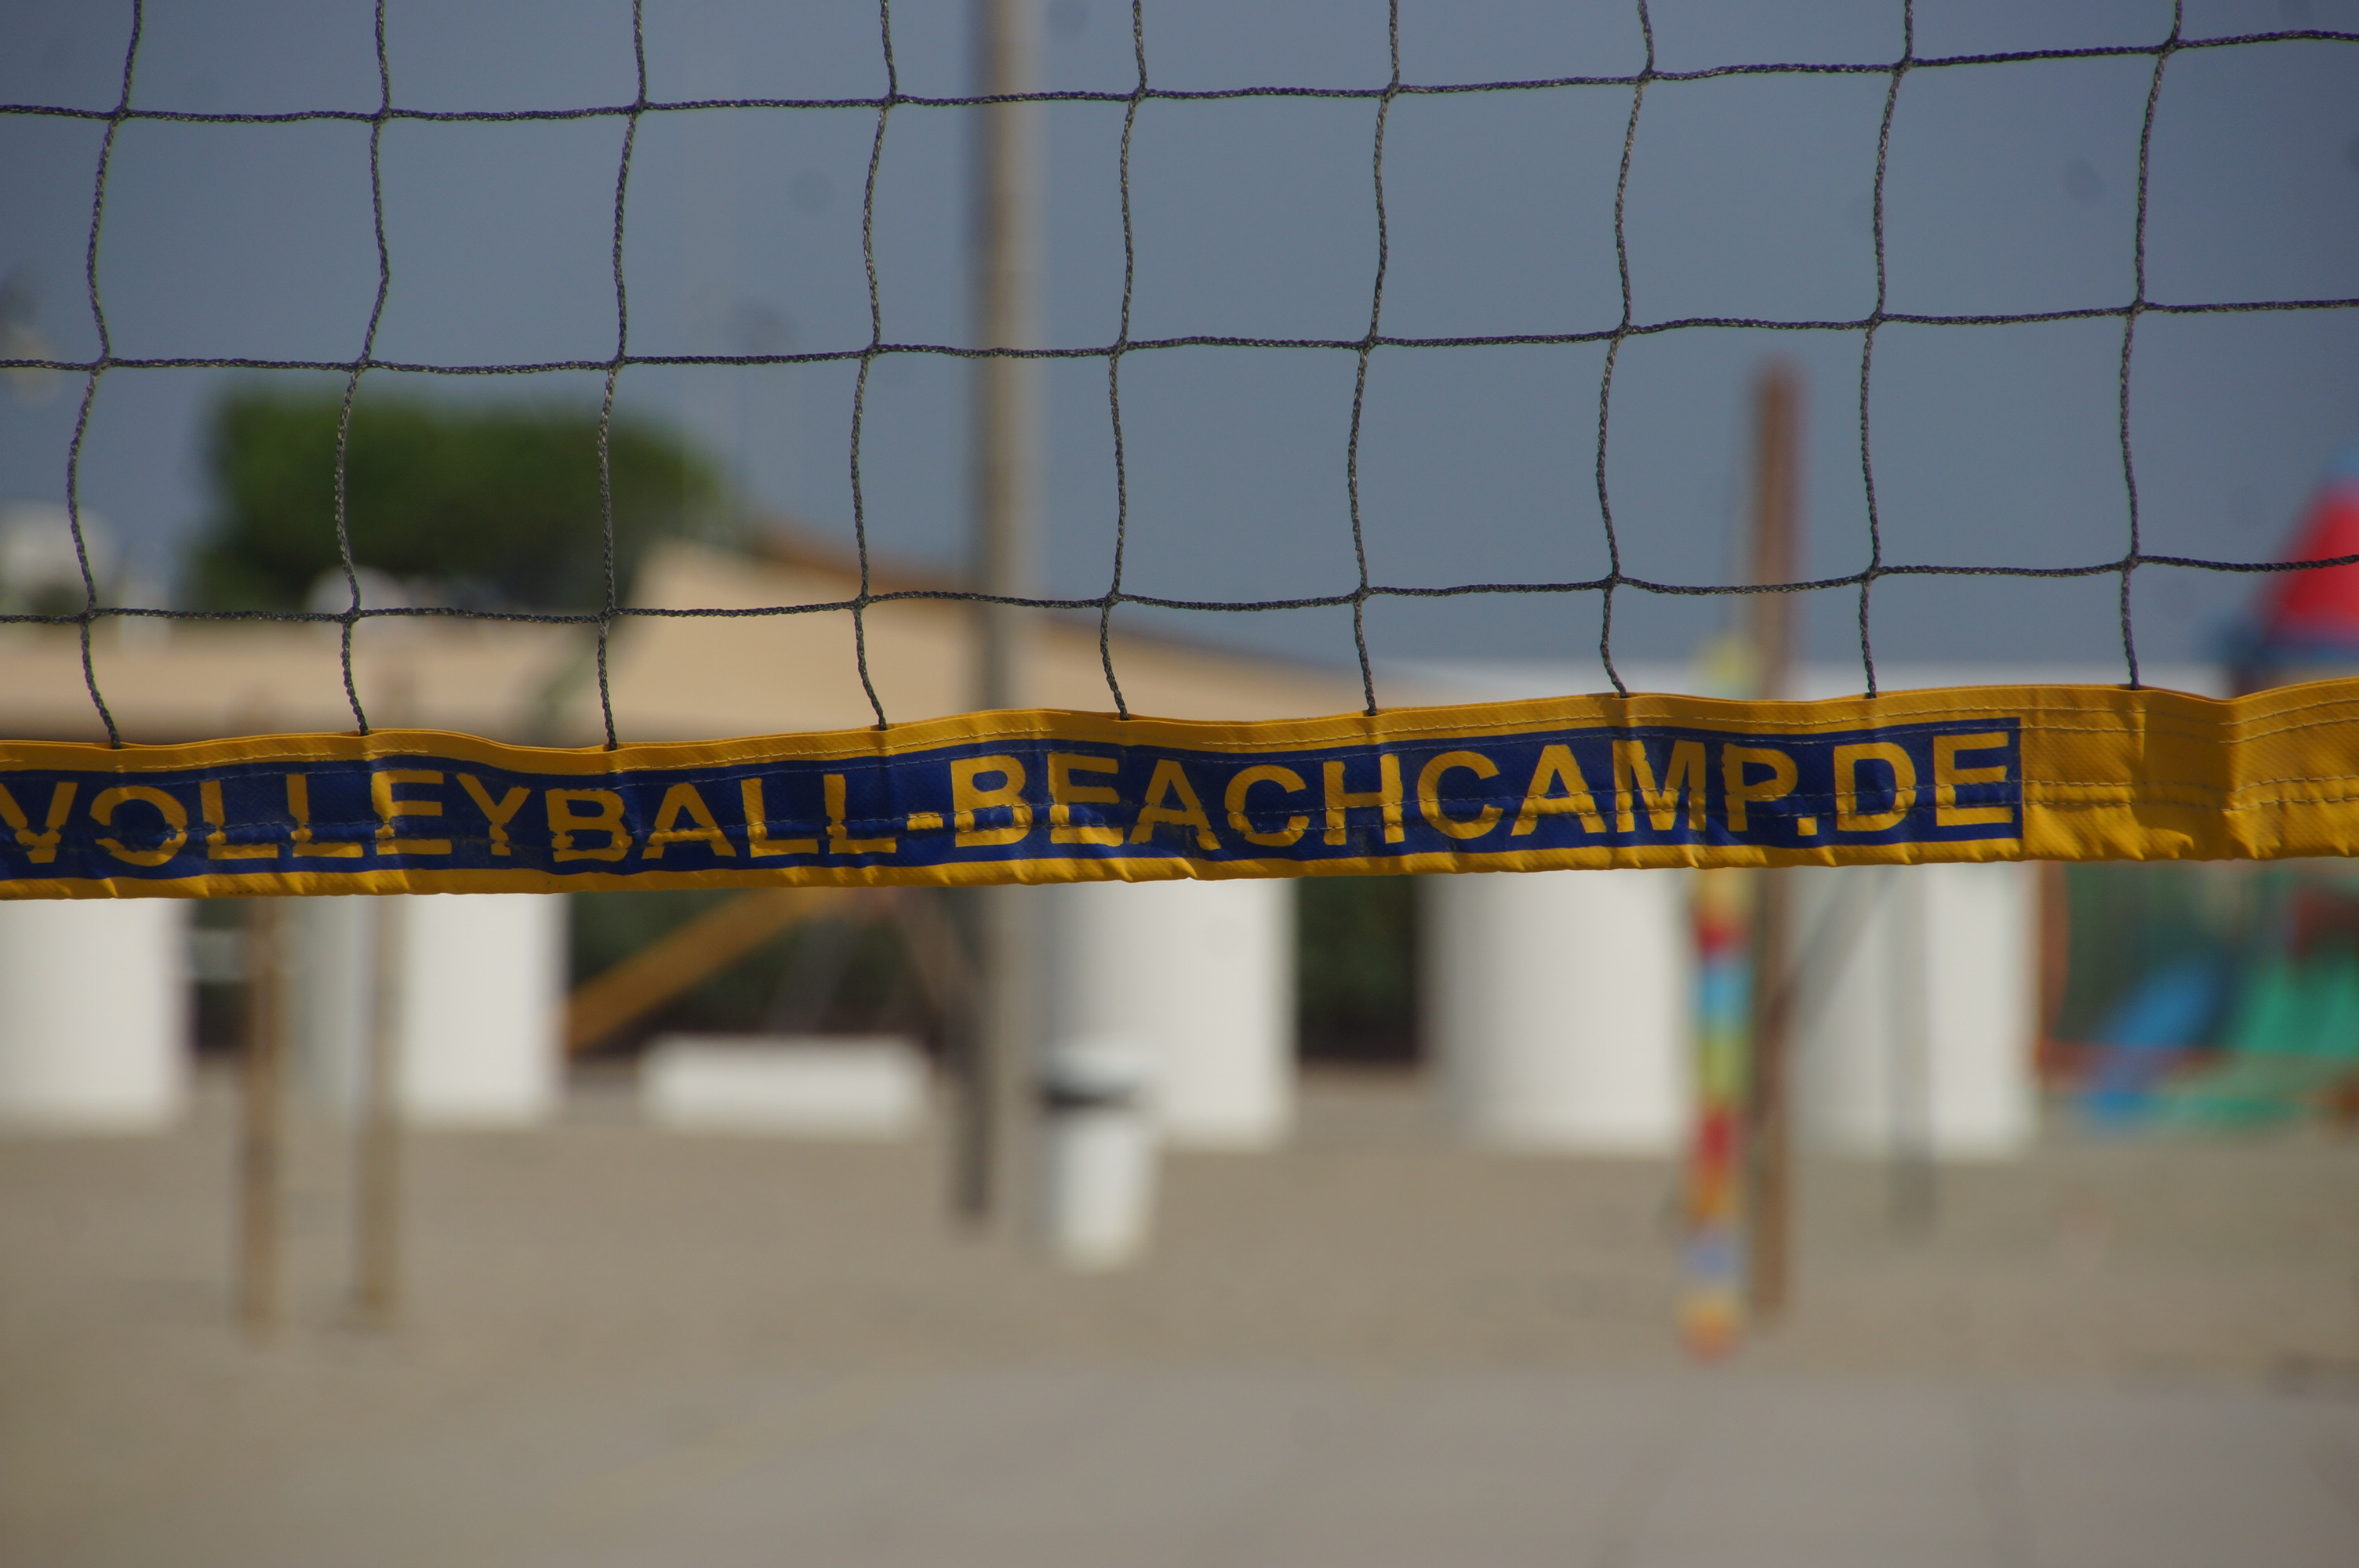 (c) Volleyball-beachcamp.de